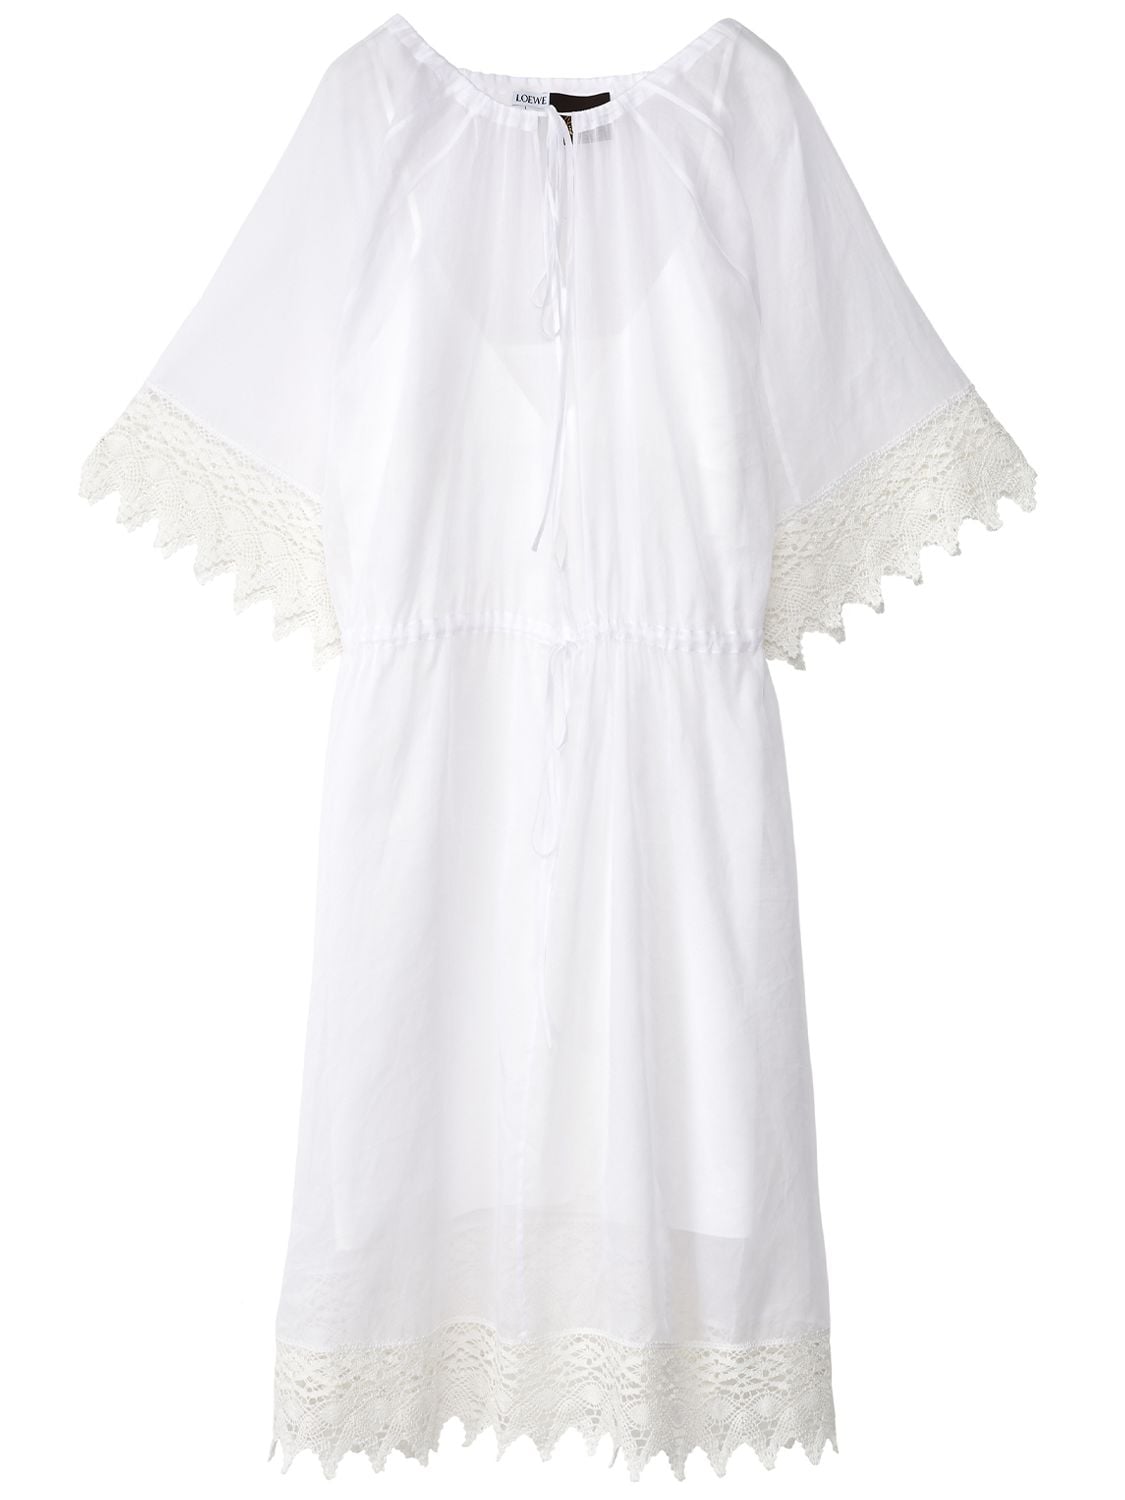 LOEWE PAULA'S IBIZA SHEER COTTON DRESS,73IQ8Q005-MJEWMA2